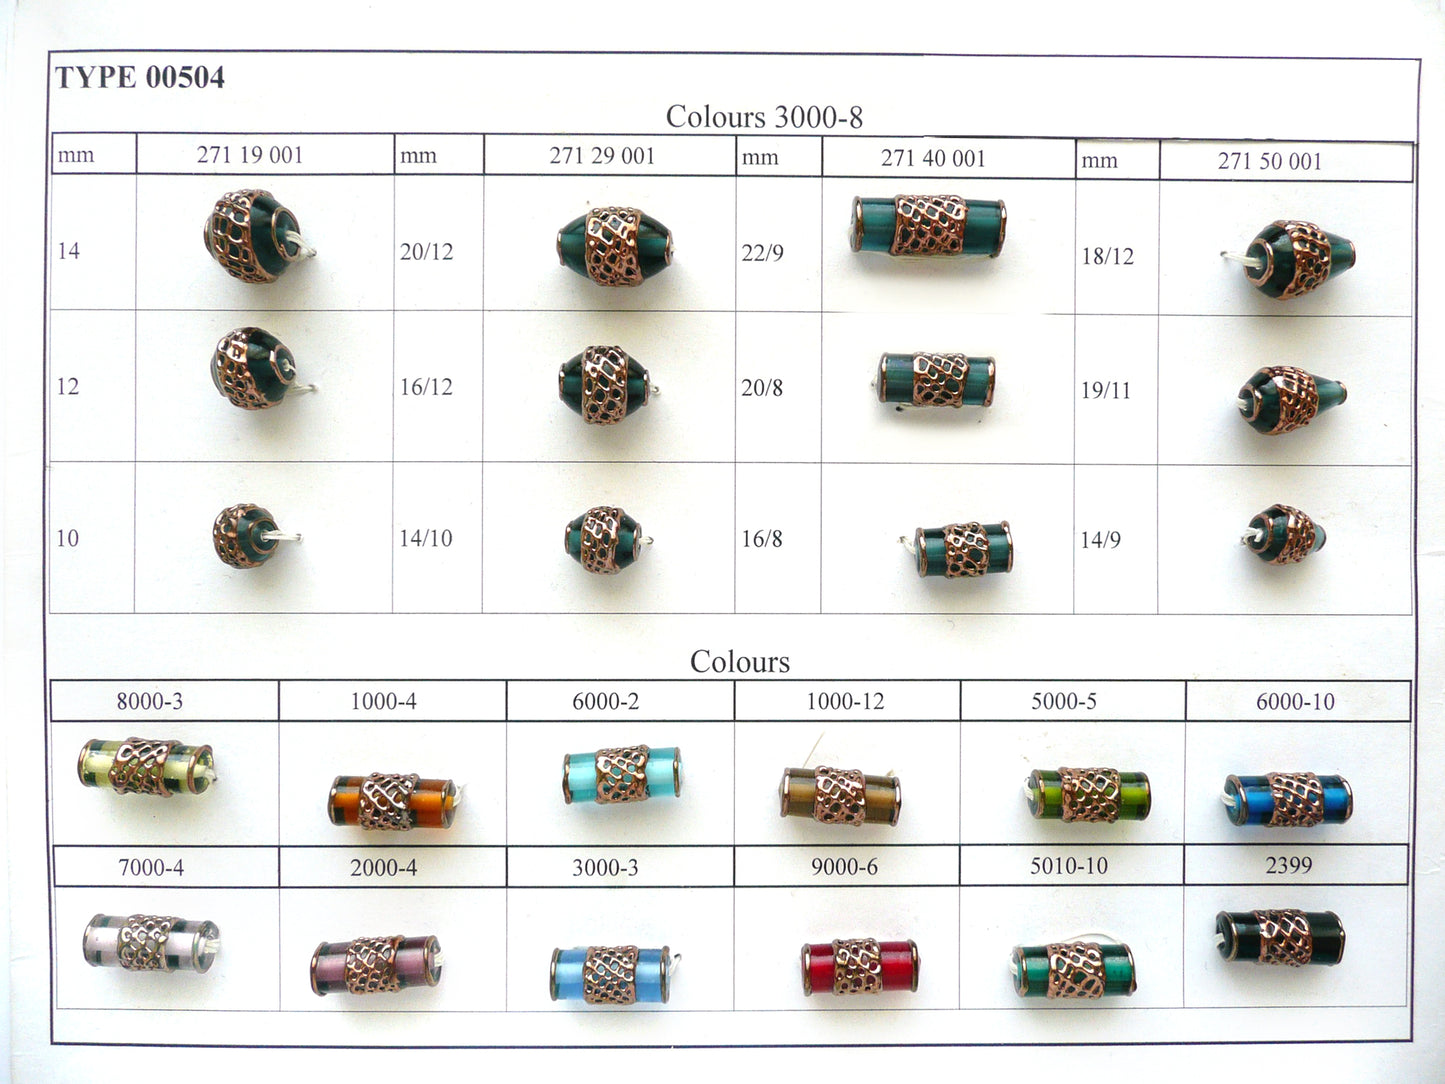 30 pcs Lampwork Beads 504 / Round (271-19-001), Handmade, Preciosa Glass, Czech Republic